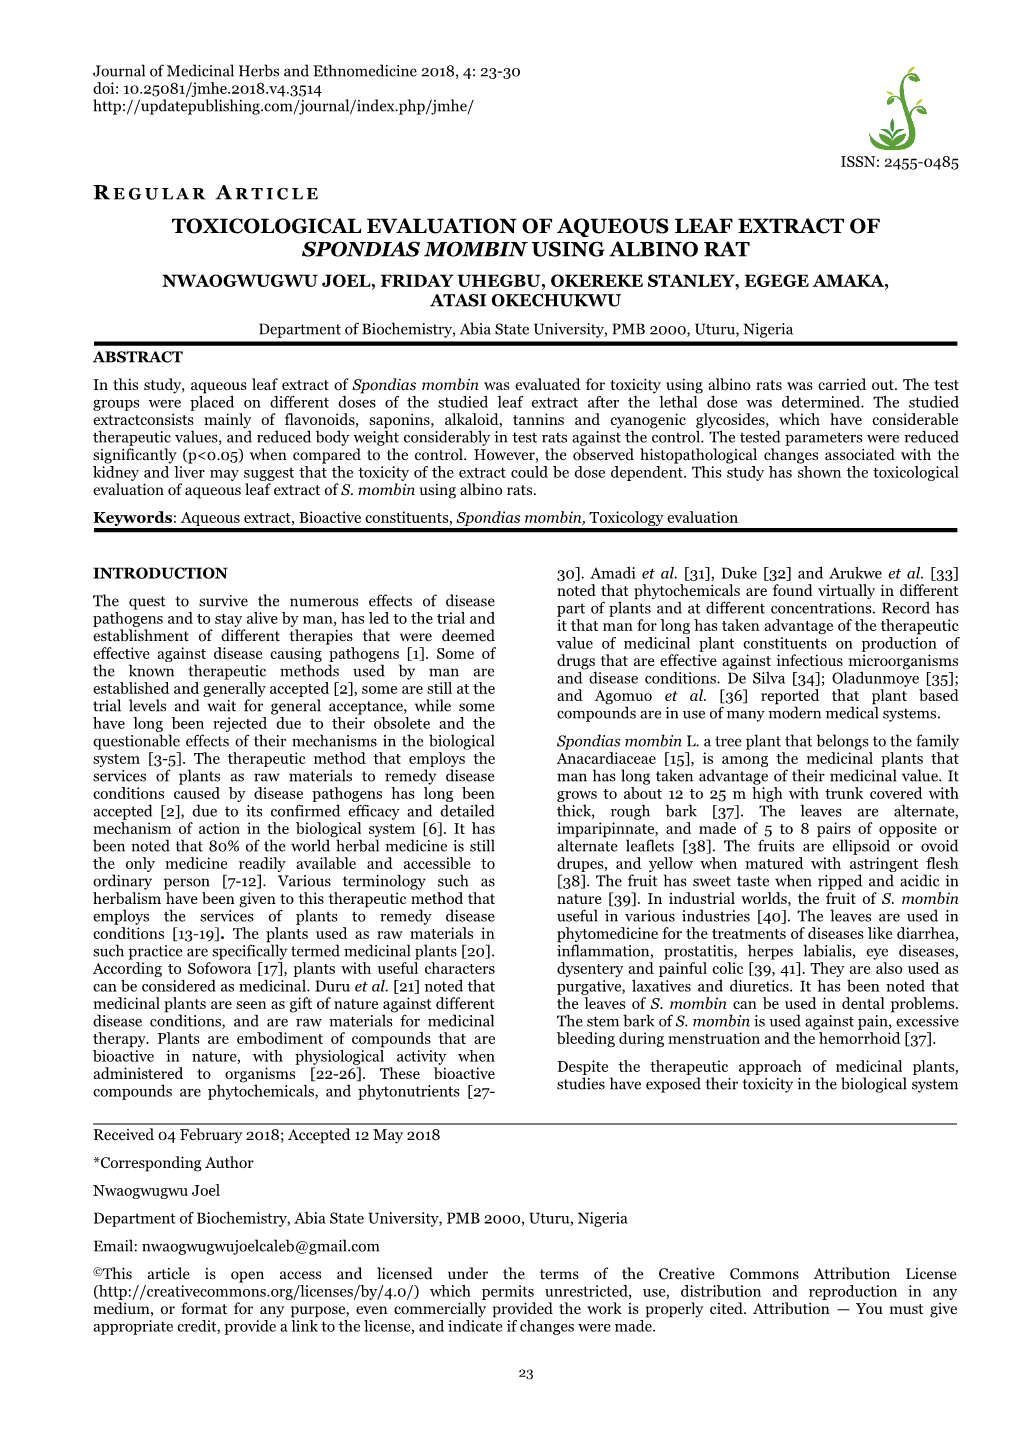 Regular Article Toxicological Evaluation of Aqueous Leaf Extract of Spondias